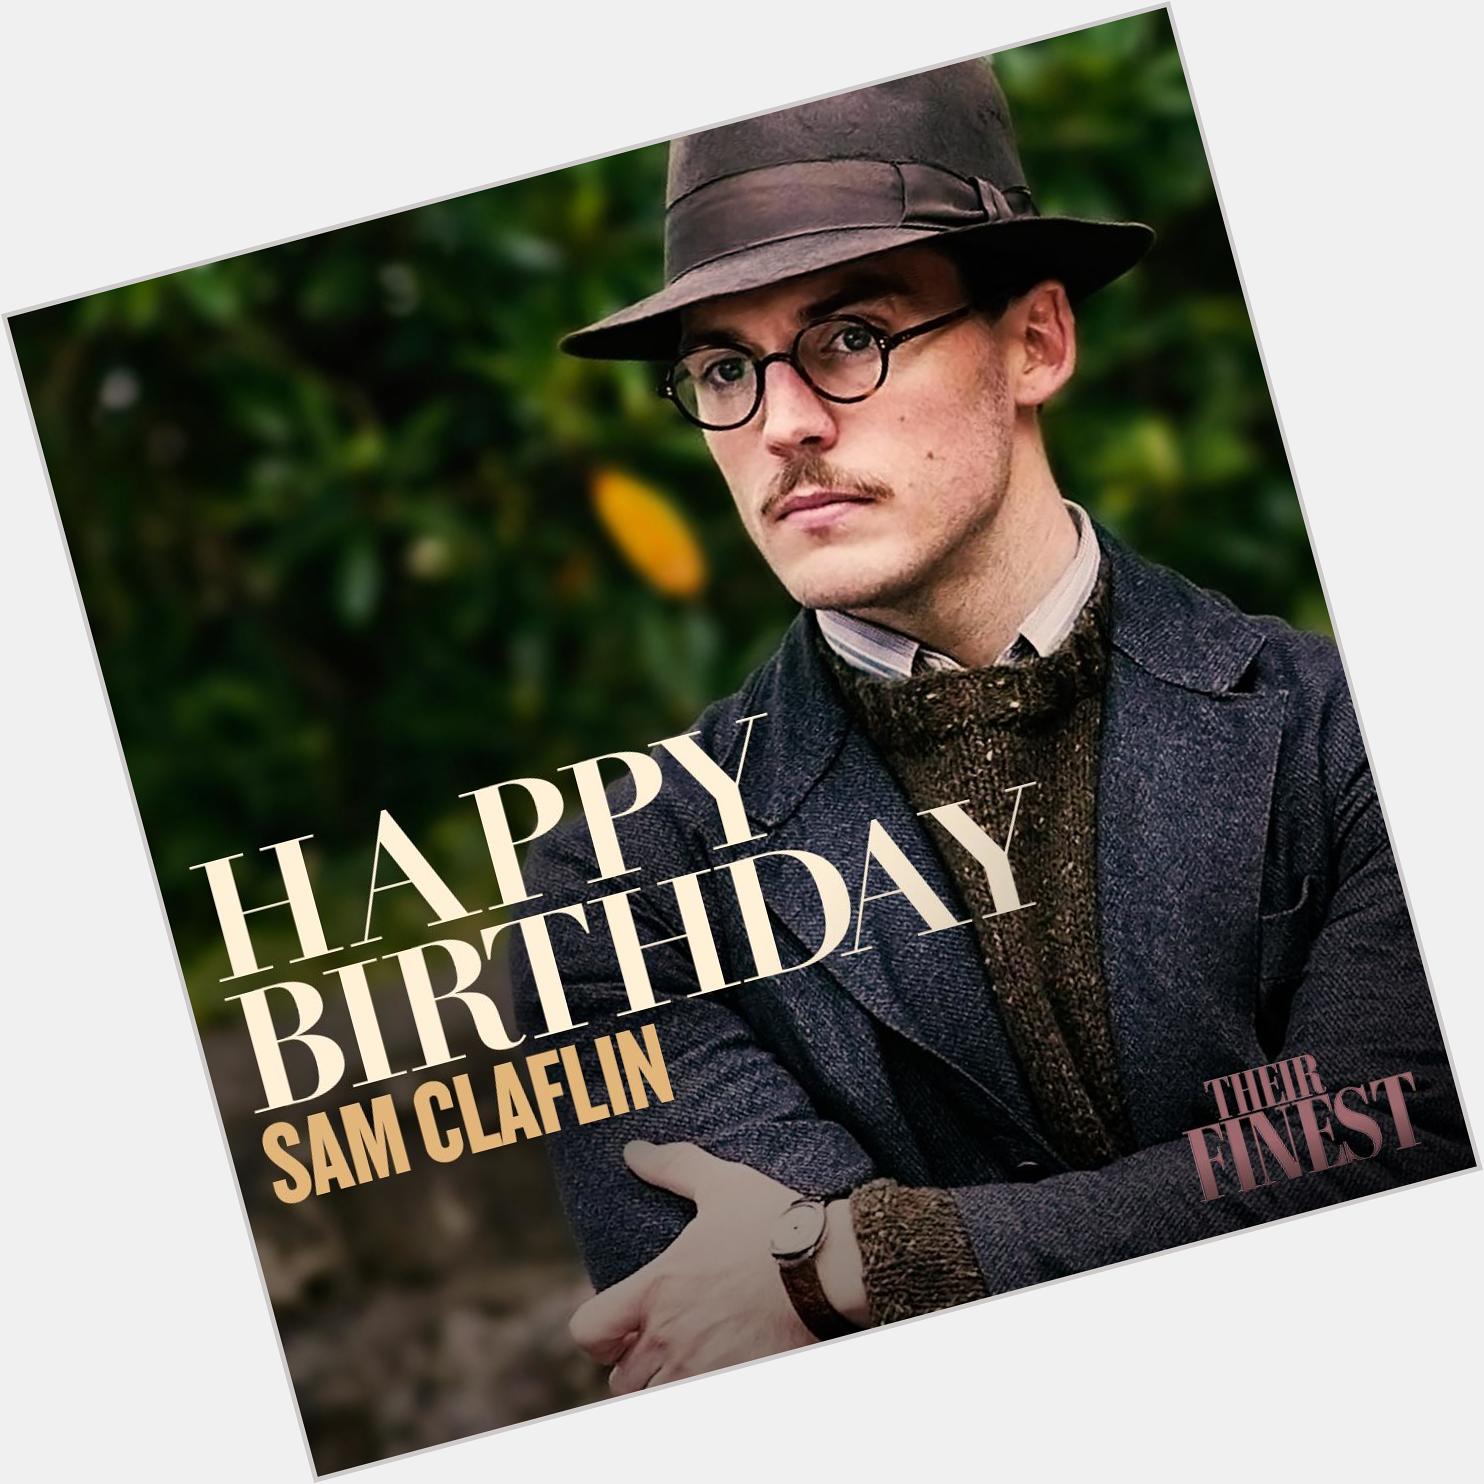 Happy birthday to the renowned wordsmith, Sam Claflin! 